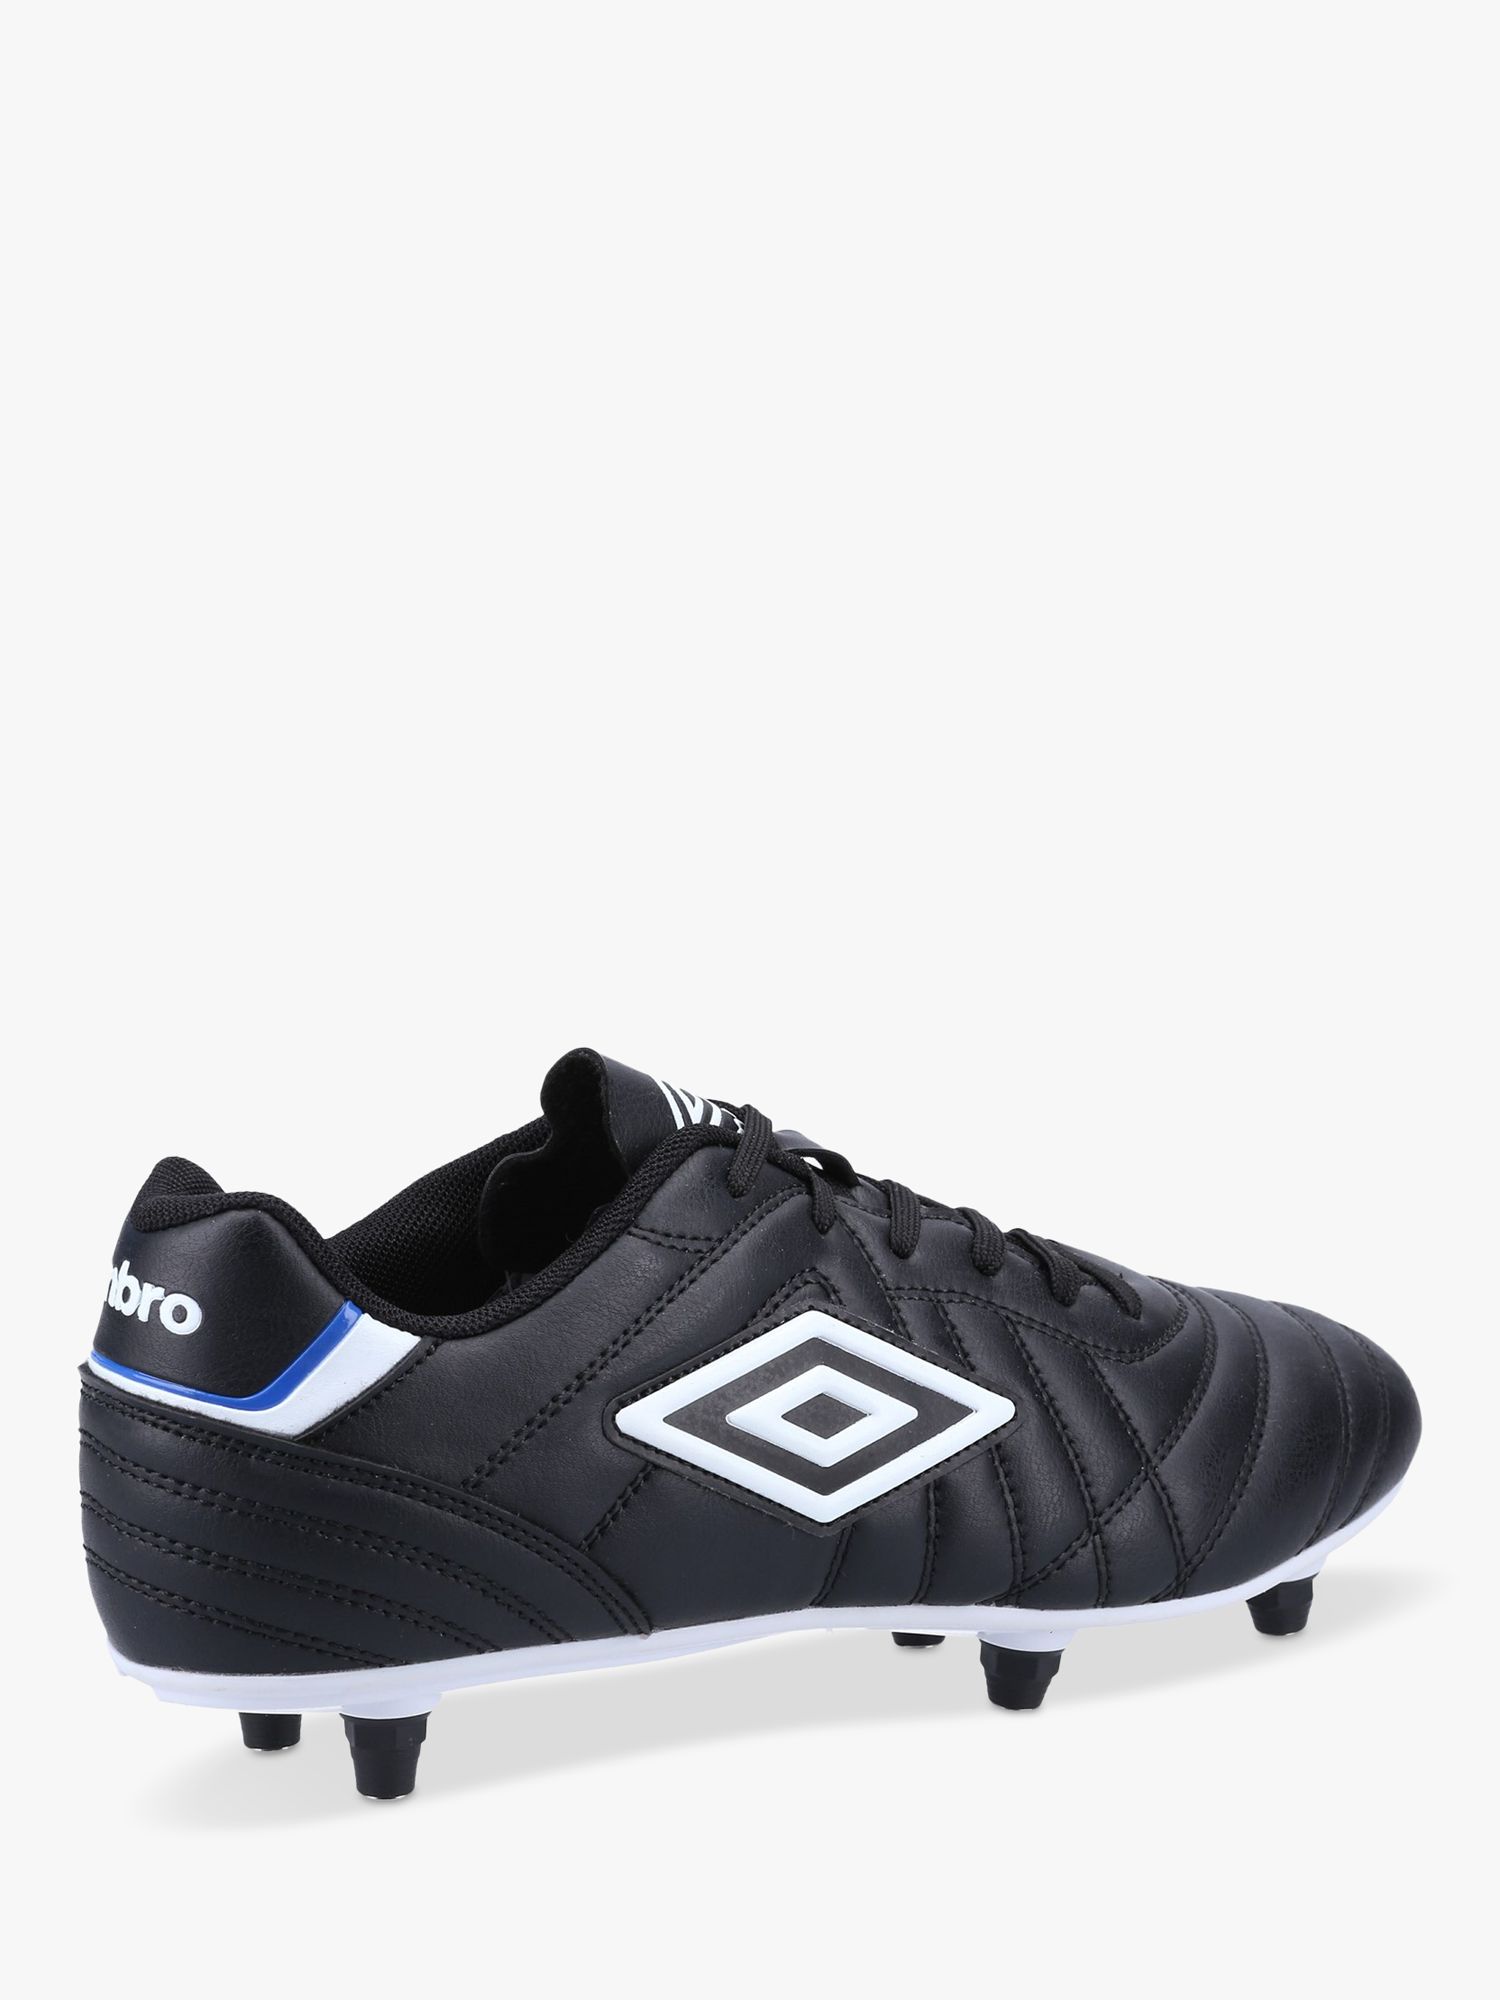 Umbro Speciali Liga Soft Ground Football Boots, Black, 11